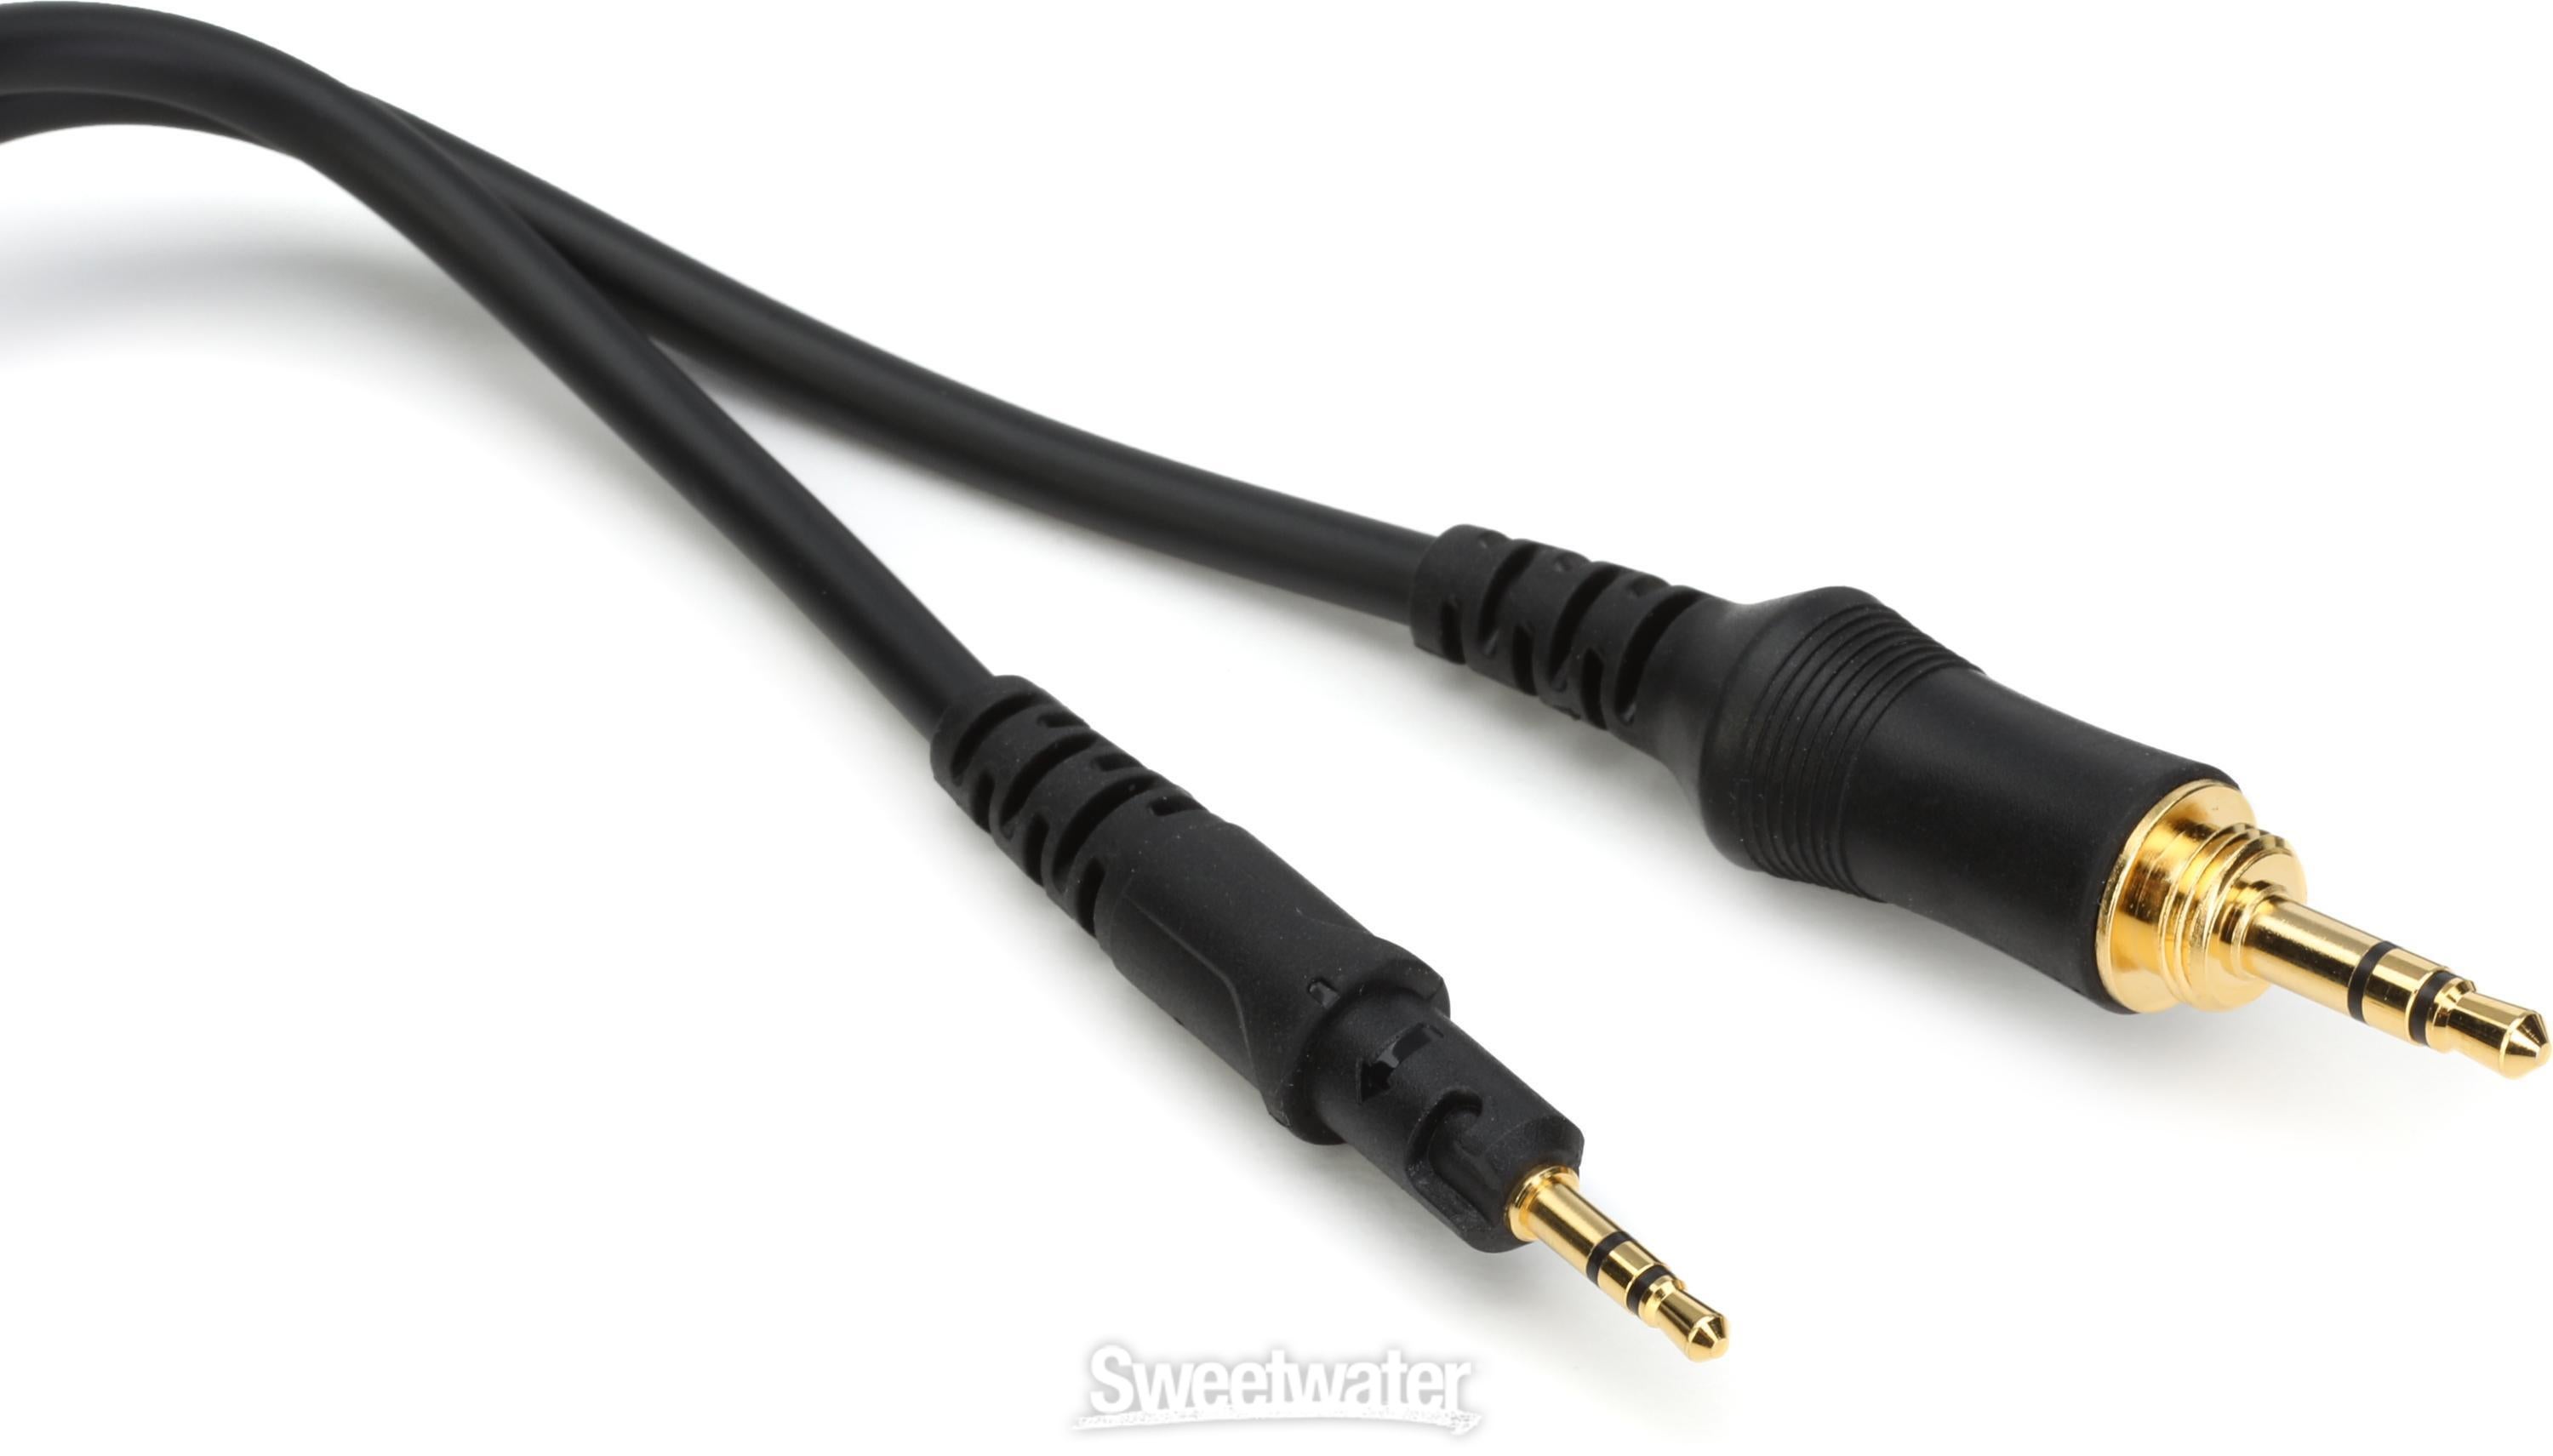 Yamaha HPH-MT8 Over-Ear Headphones | Sweetwater